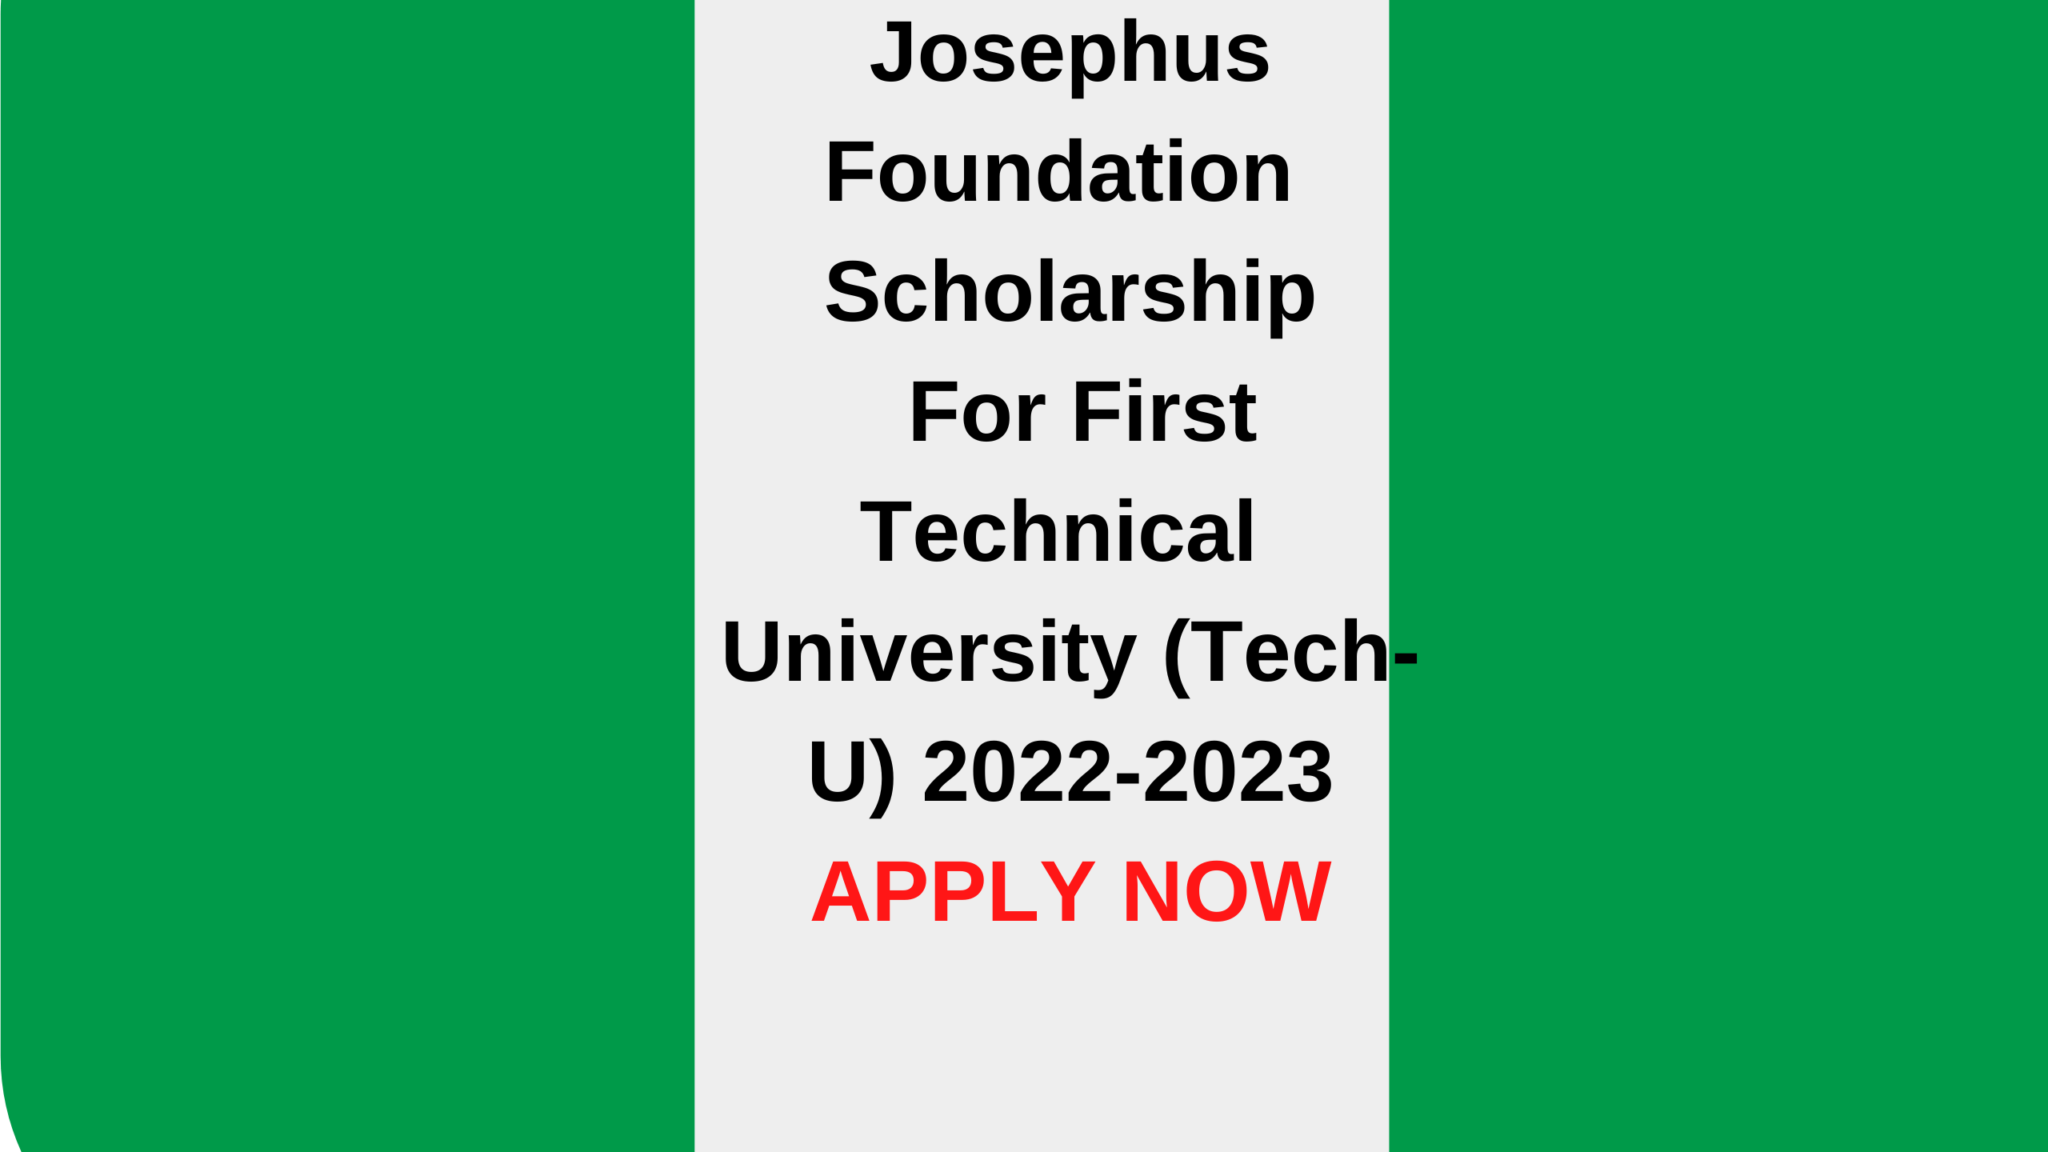 Josephus Foundation Scholarship For First Technical University (Tech-U) 2022-2023